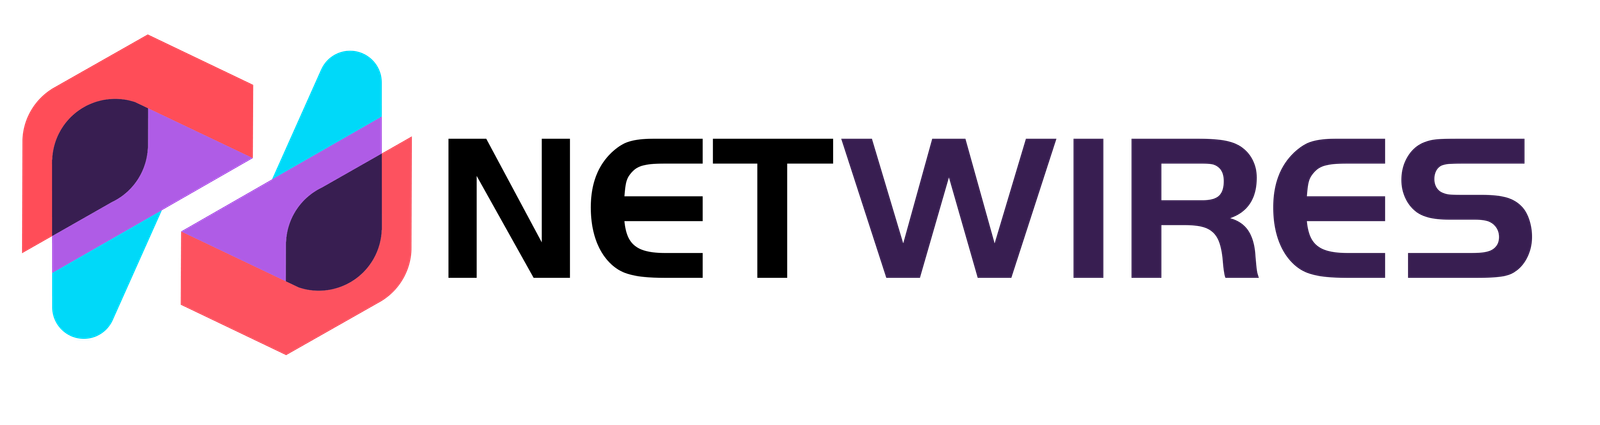 Netwires Logo